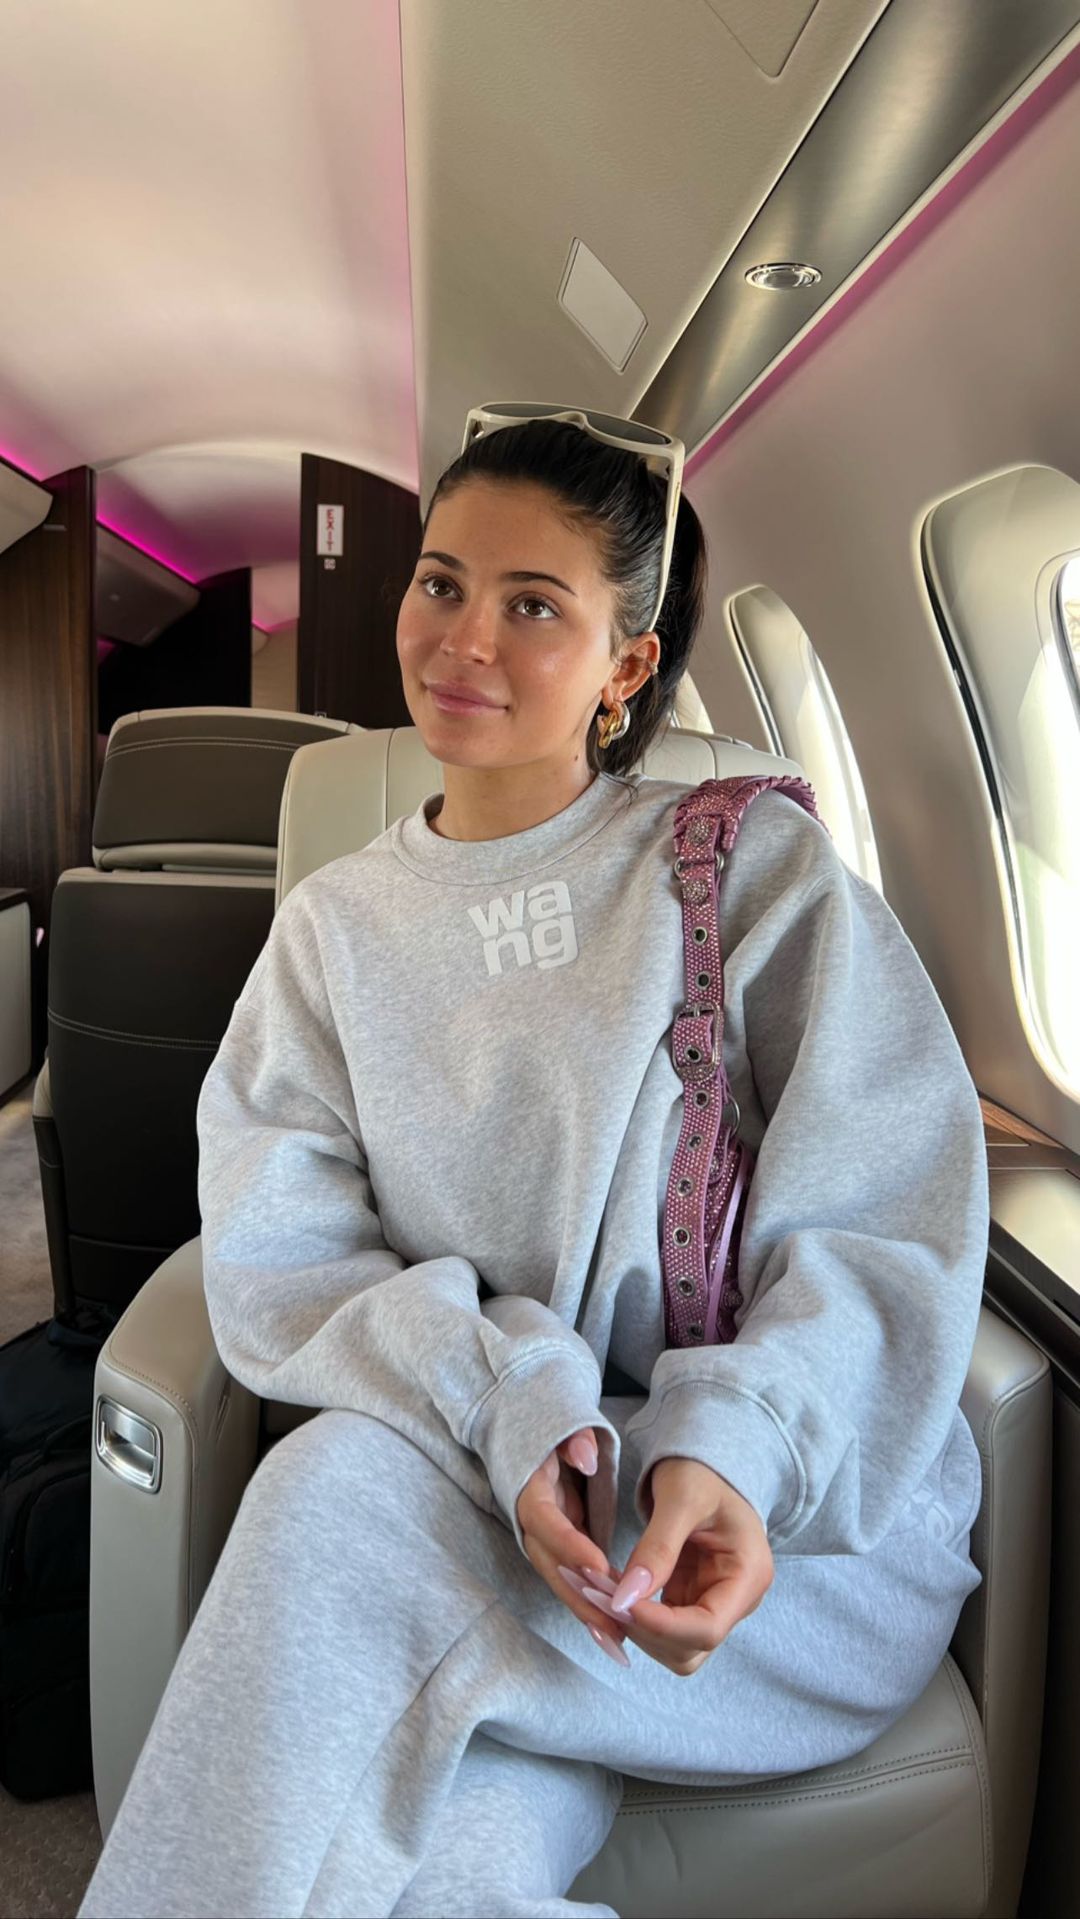 Kylie often jets around on her $72 million private plane